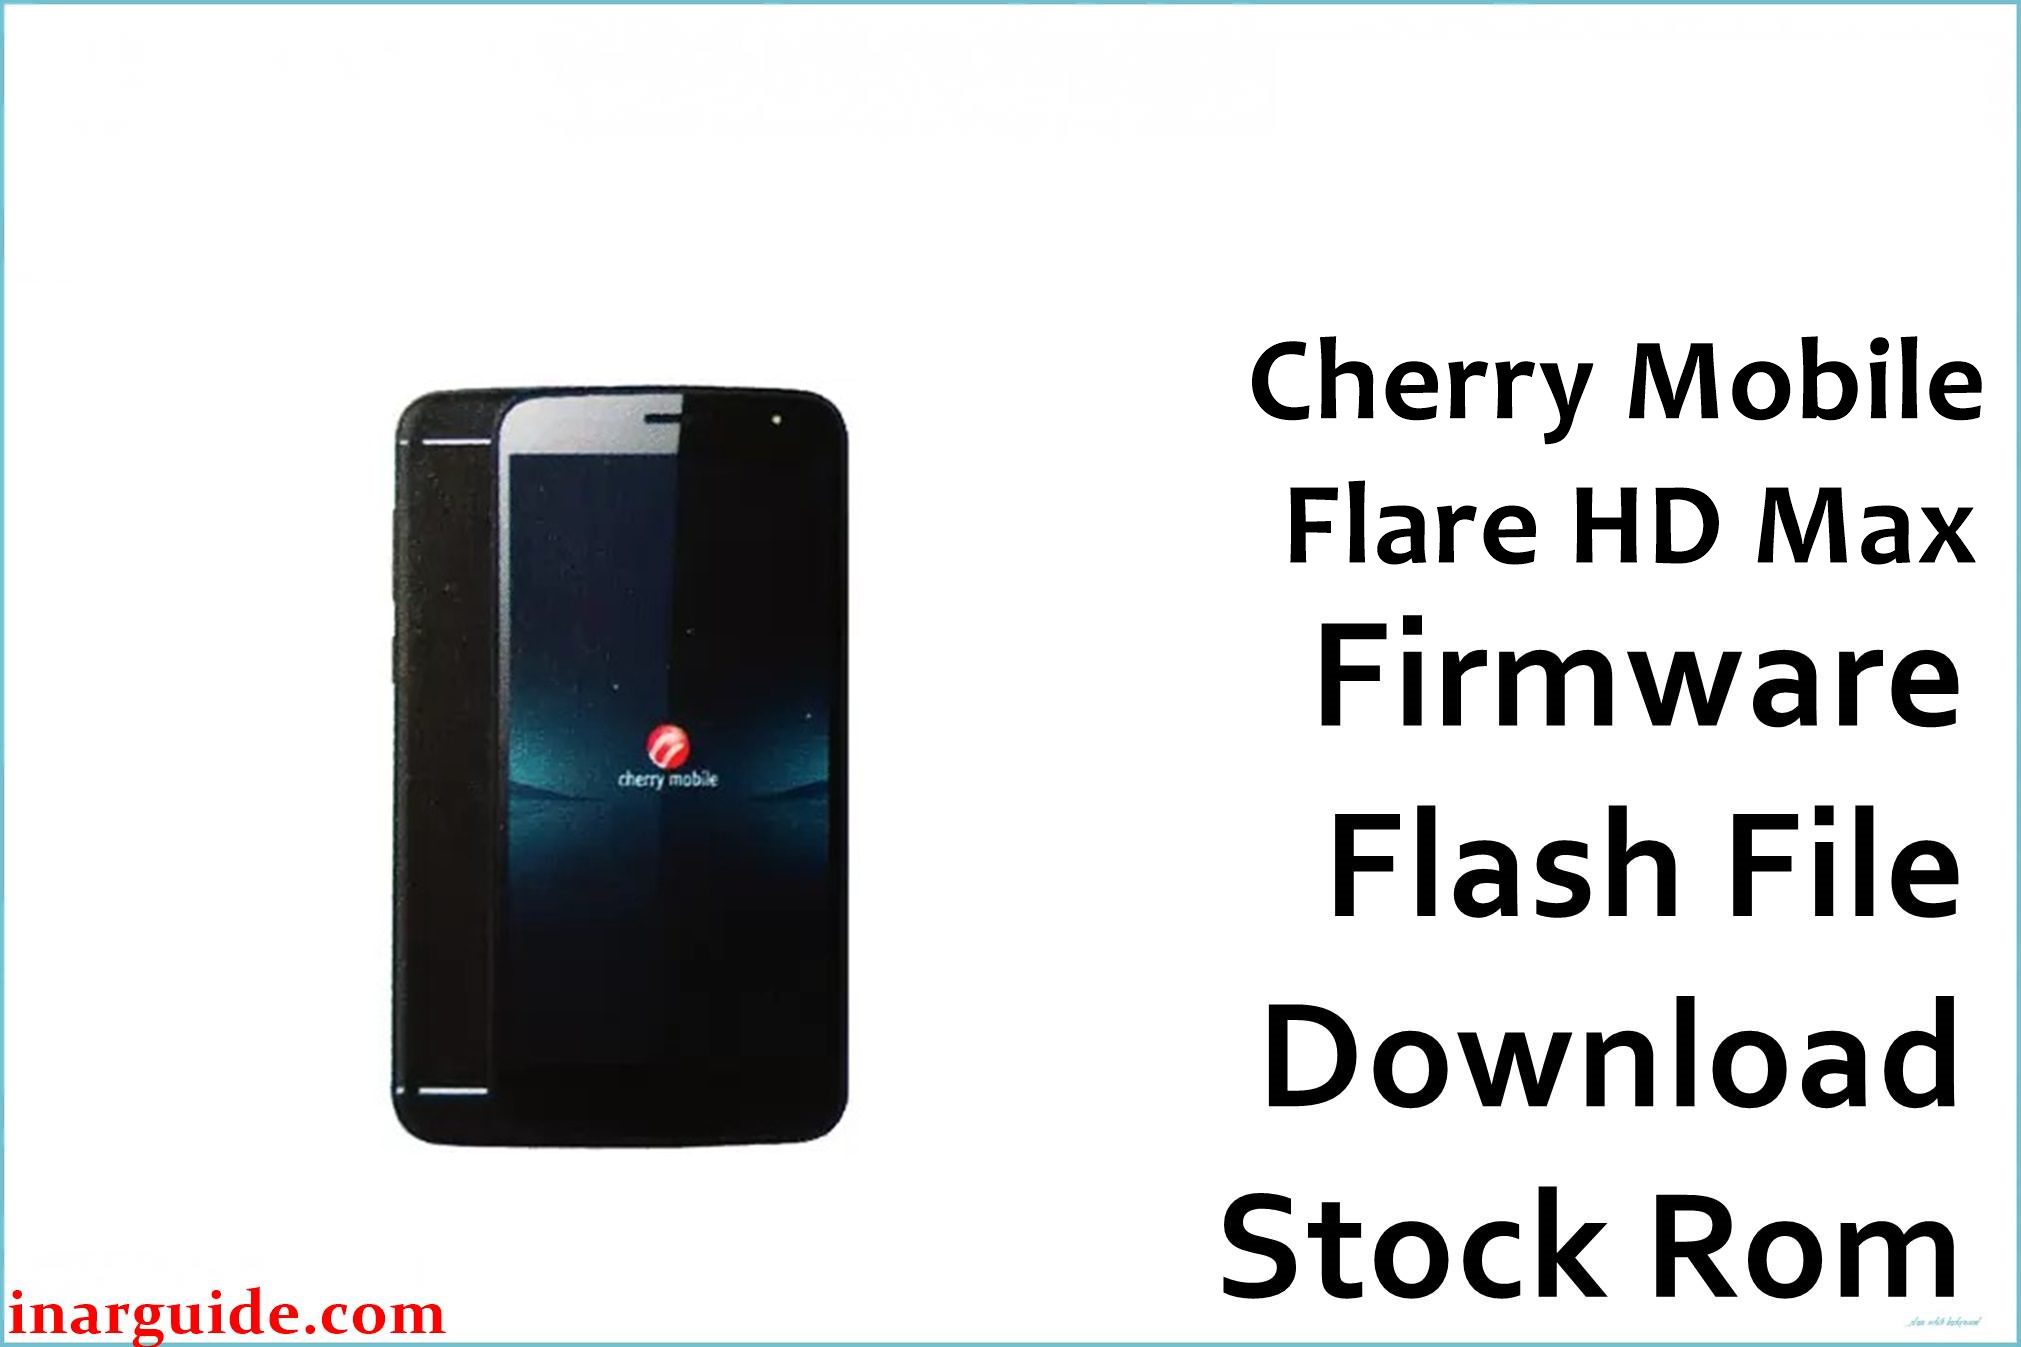 Cherry Mobile Flare HD Max